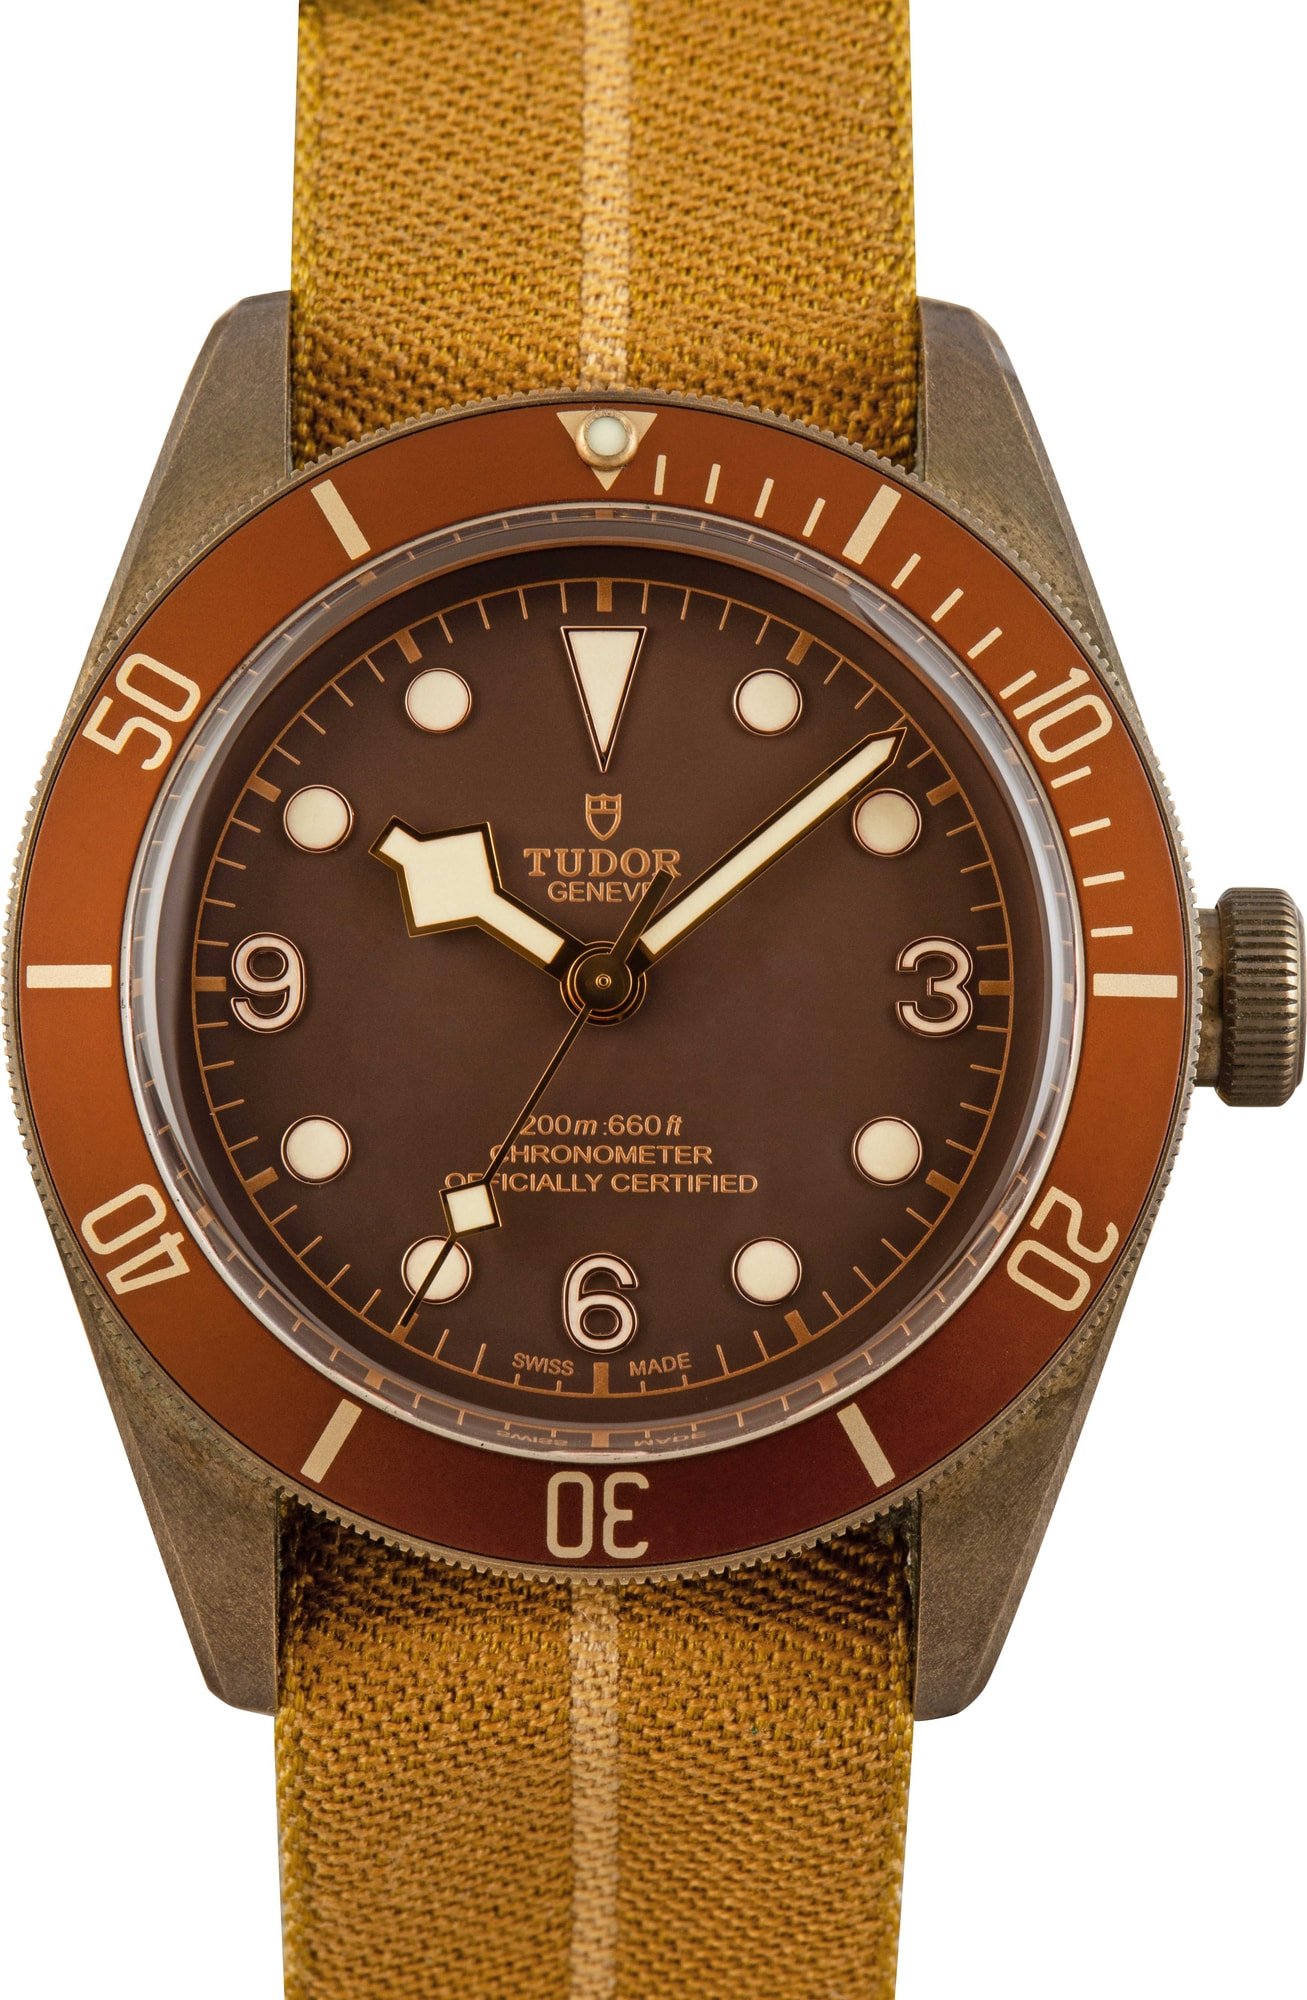 Buy Used Tudor Black Bay 79250 | Bob's Watches - Sku: 163497